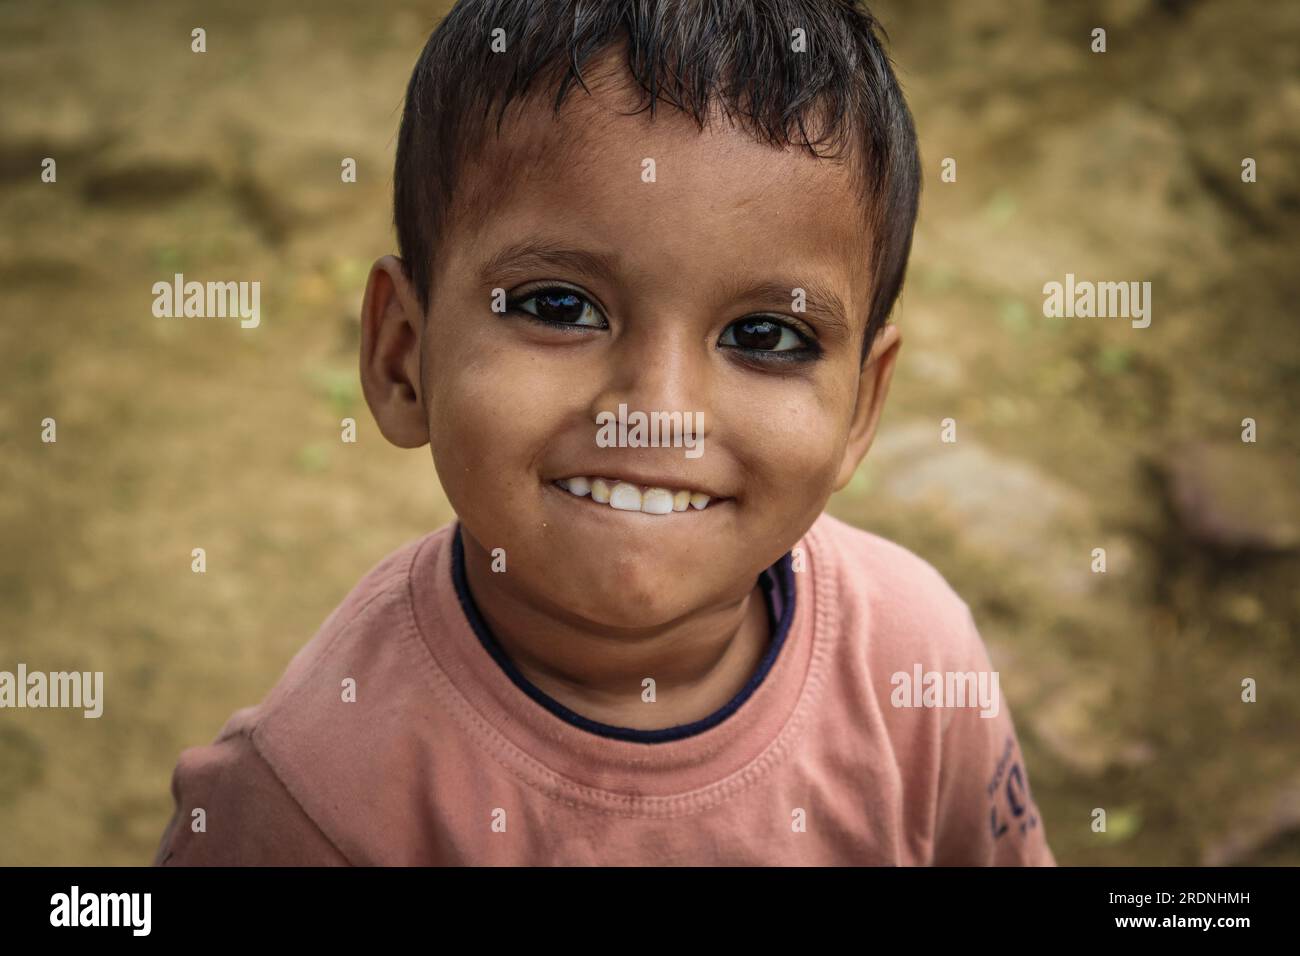 village boy showing unbrushed teeth Stock Photo